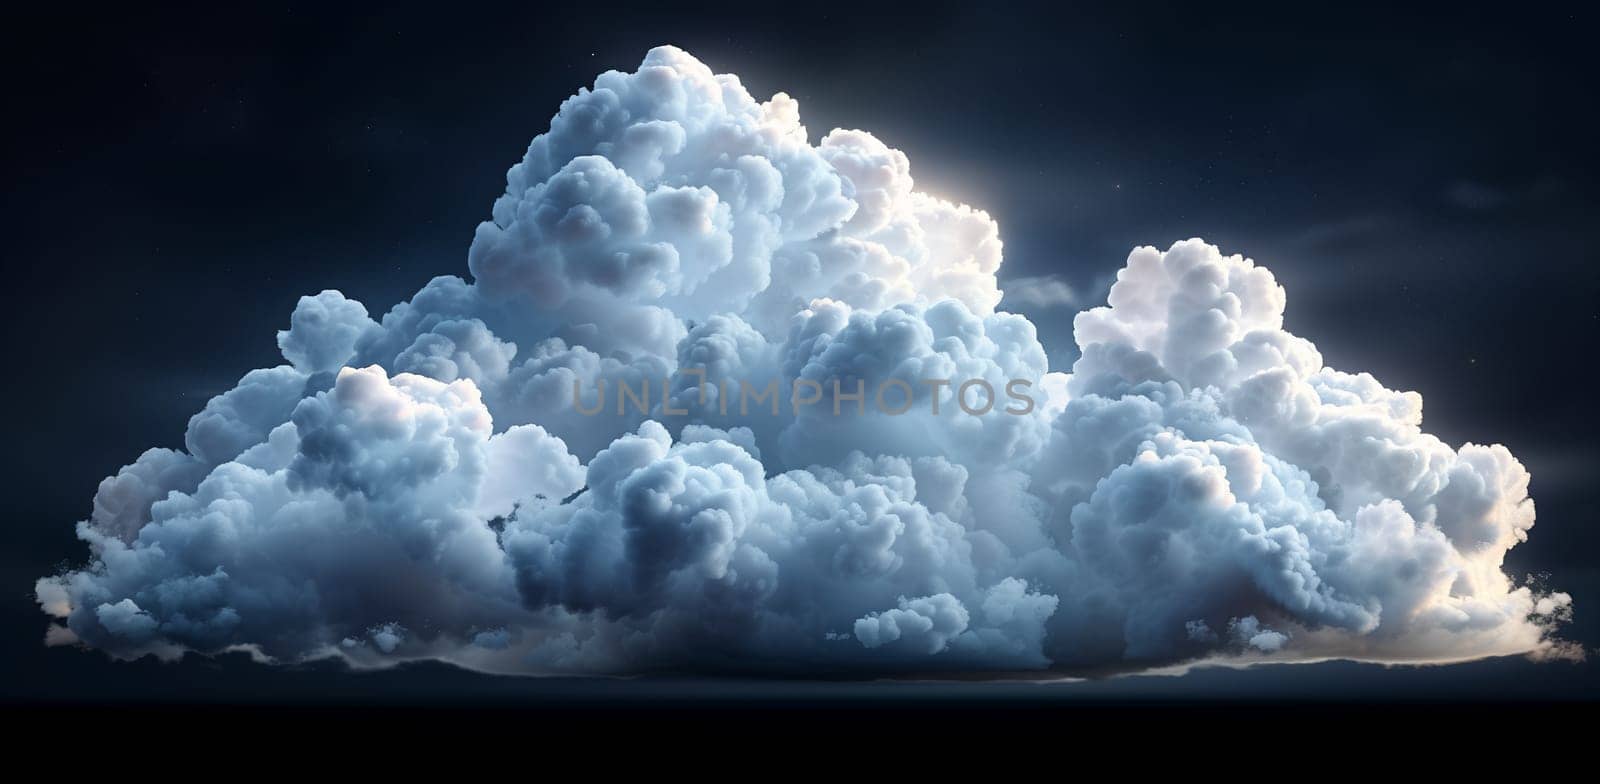 Cumulus cloud with sun shining through against electric blue sky by richwolf